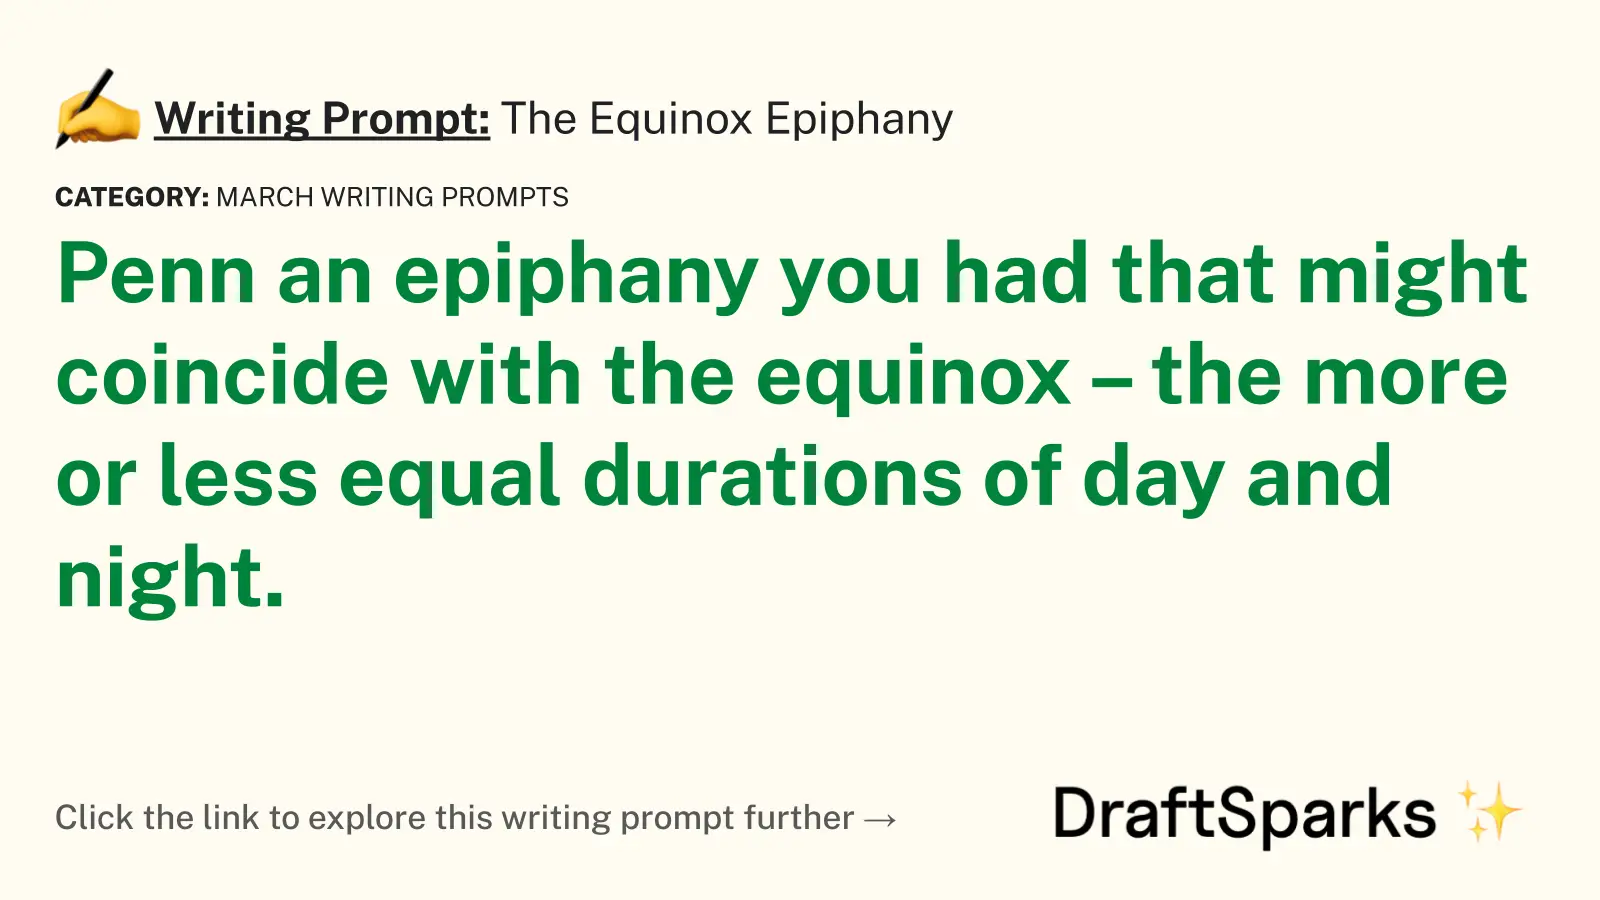 The Equinox Epiphany